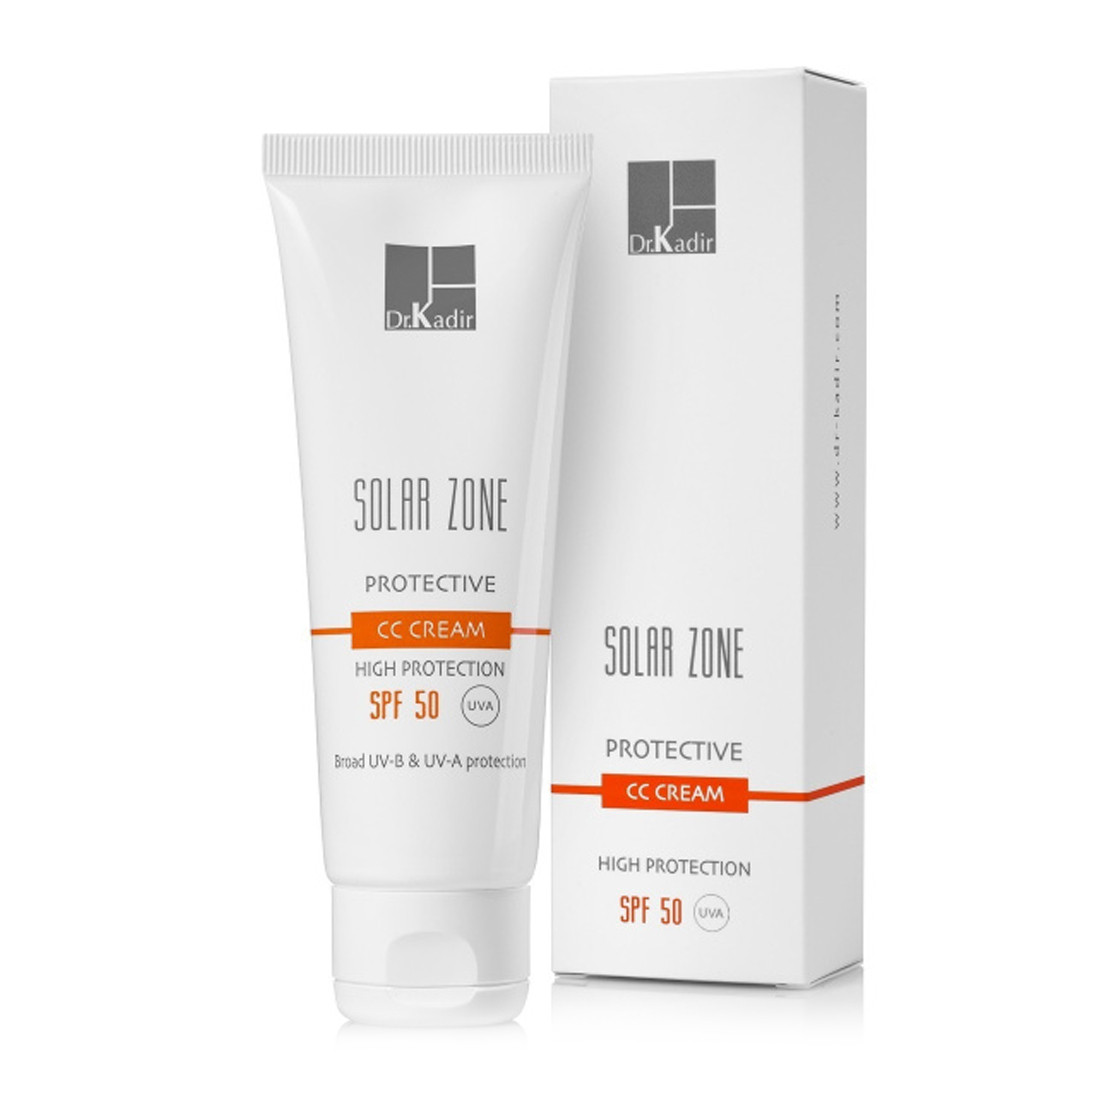 Dr. Kadir Solar Zone Protective CC Cream SPF 50+ - Солнцезащитный увлажняющий CC-крем SPF 50+